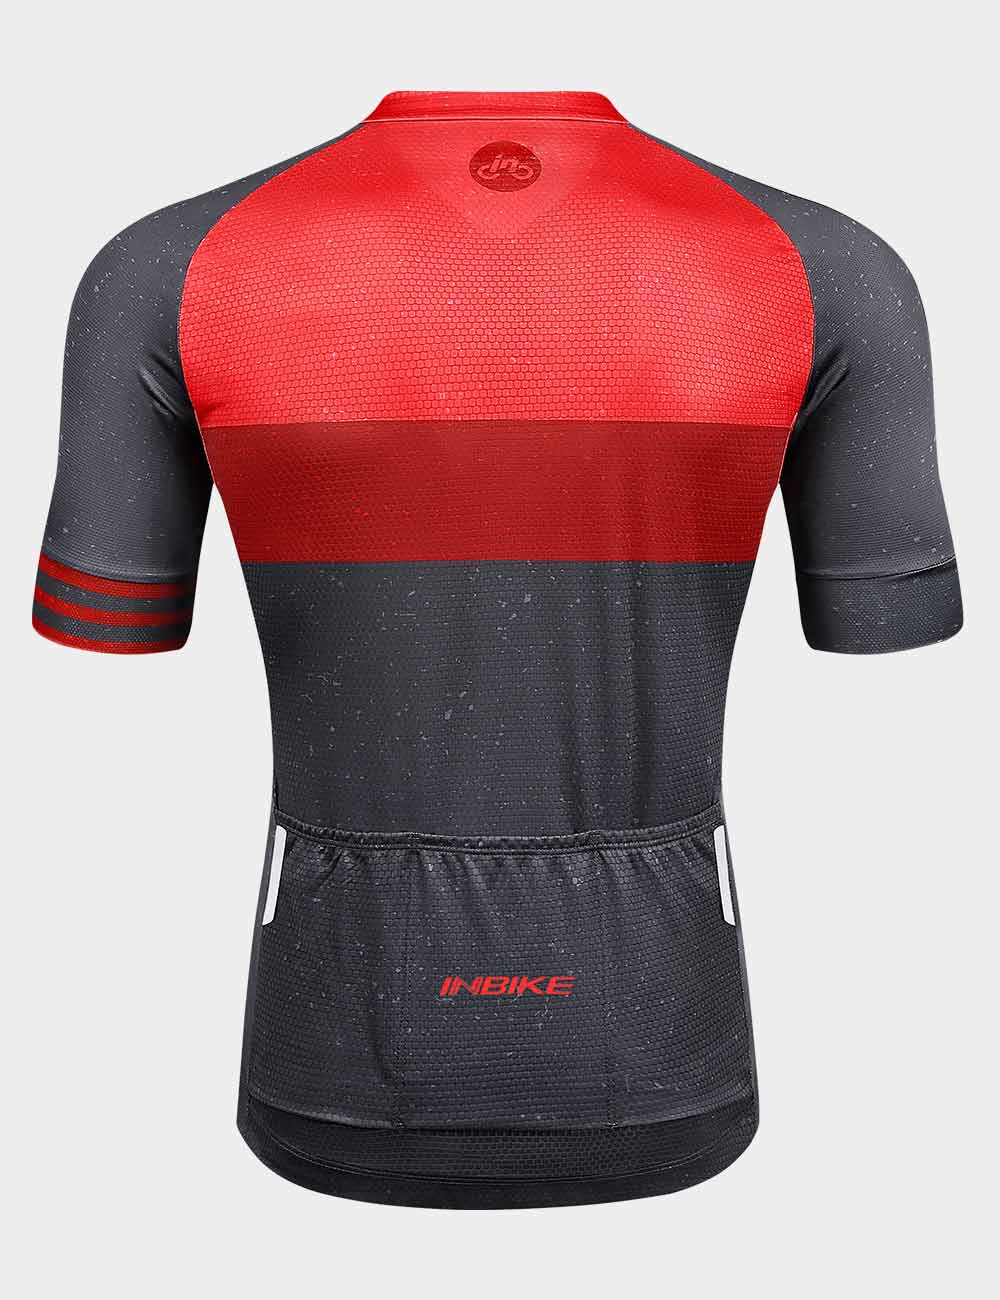 INBIKE Cycling bike Outdoor Sports Short Sleeves Jersey Top Only IA366 SJ 